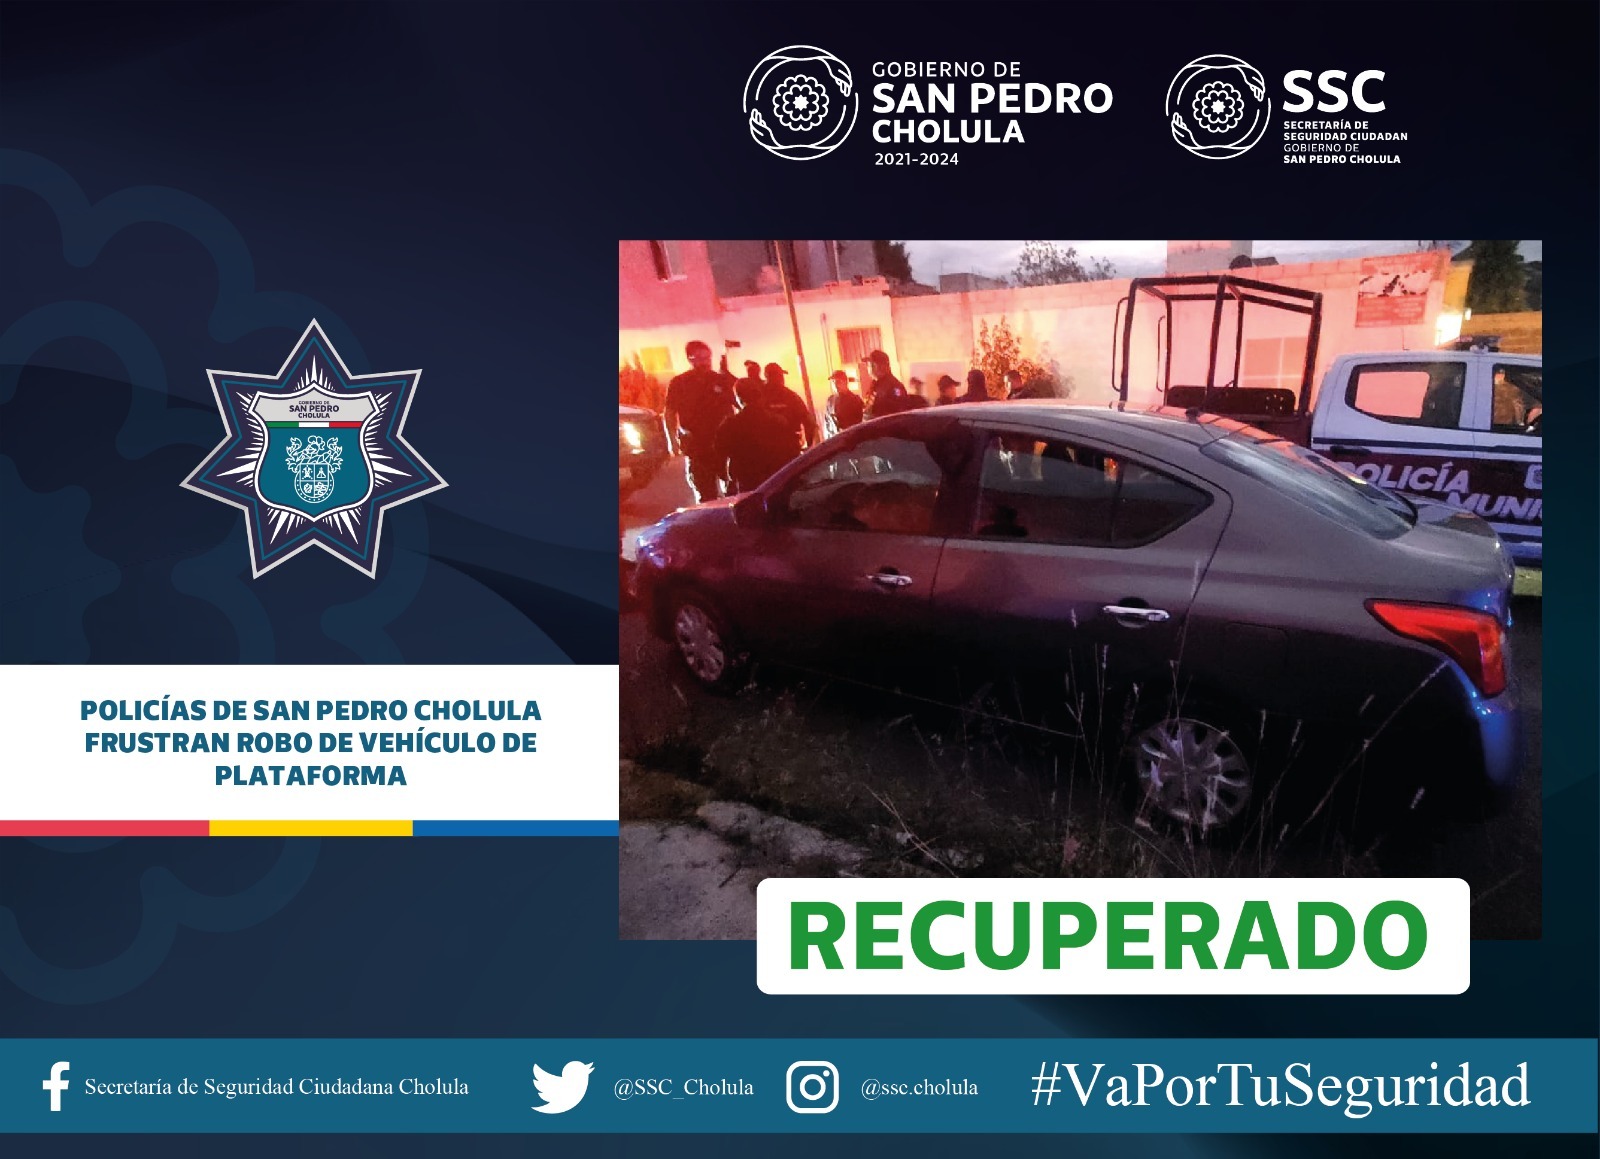 Policías de San Pedro Cholula frustran robo de vehículo de plataforma